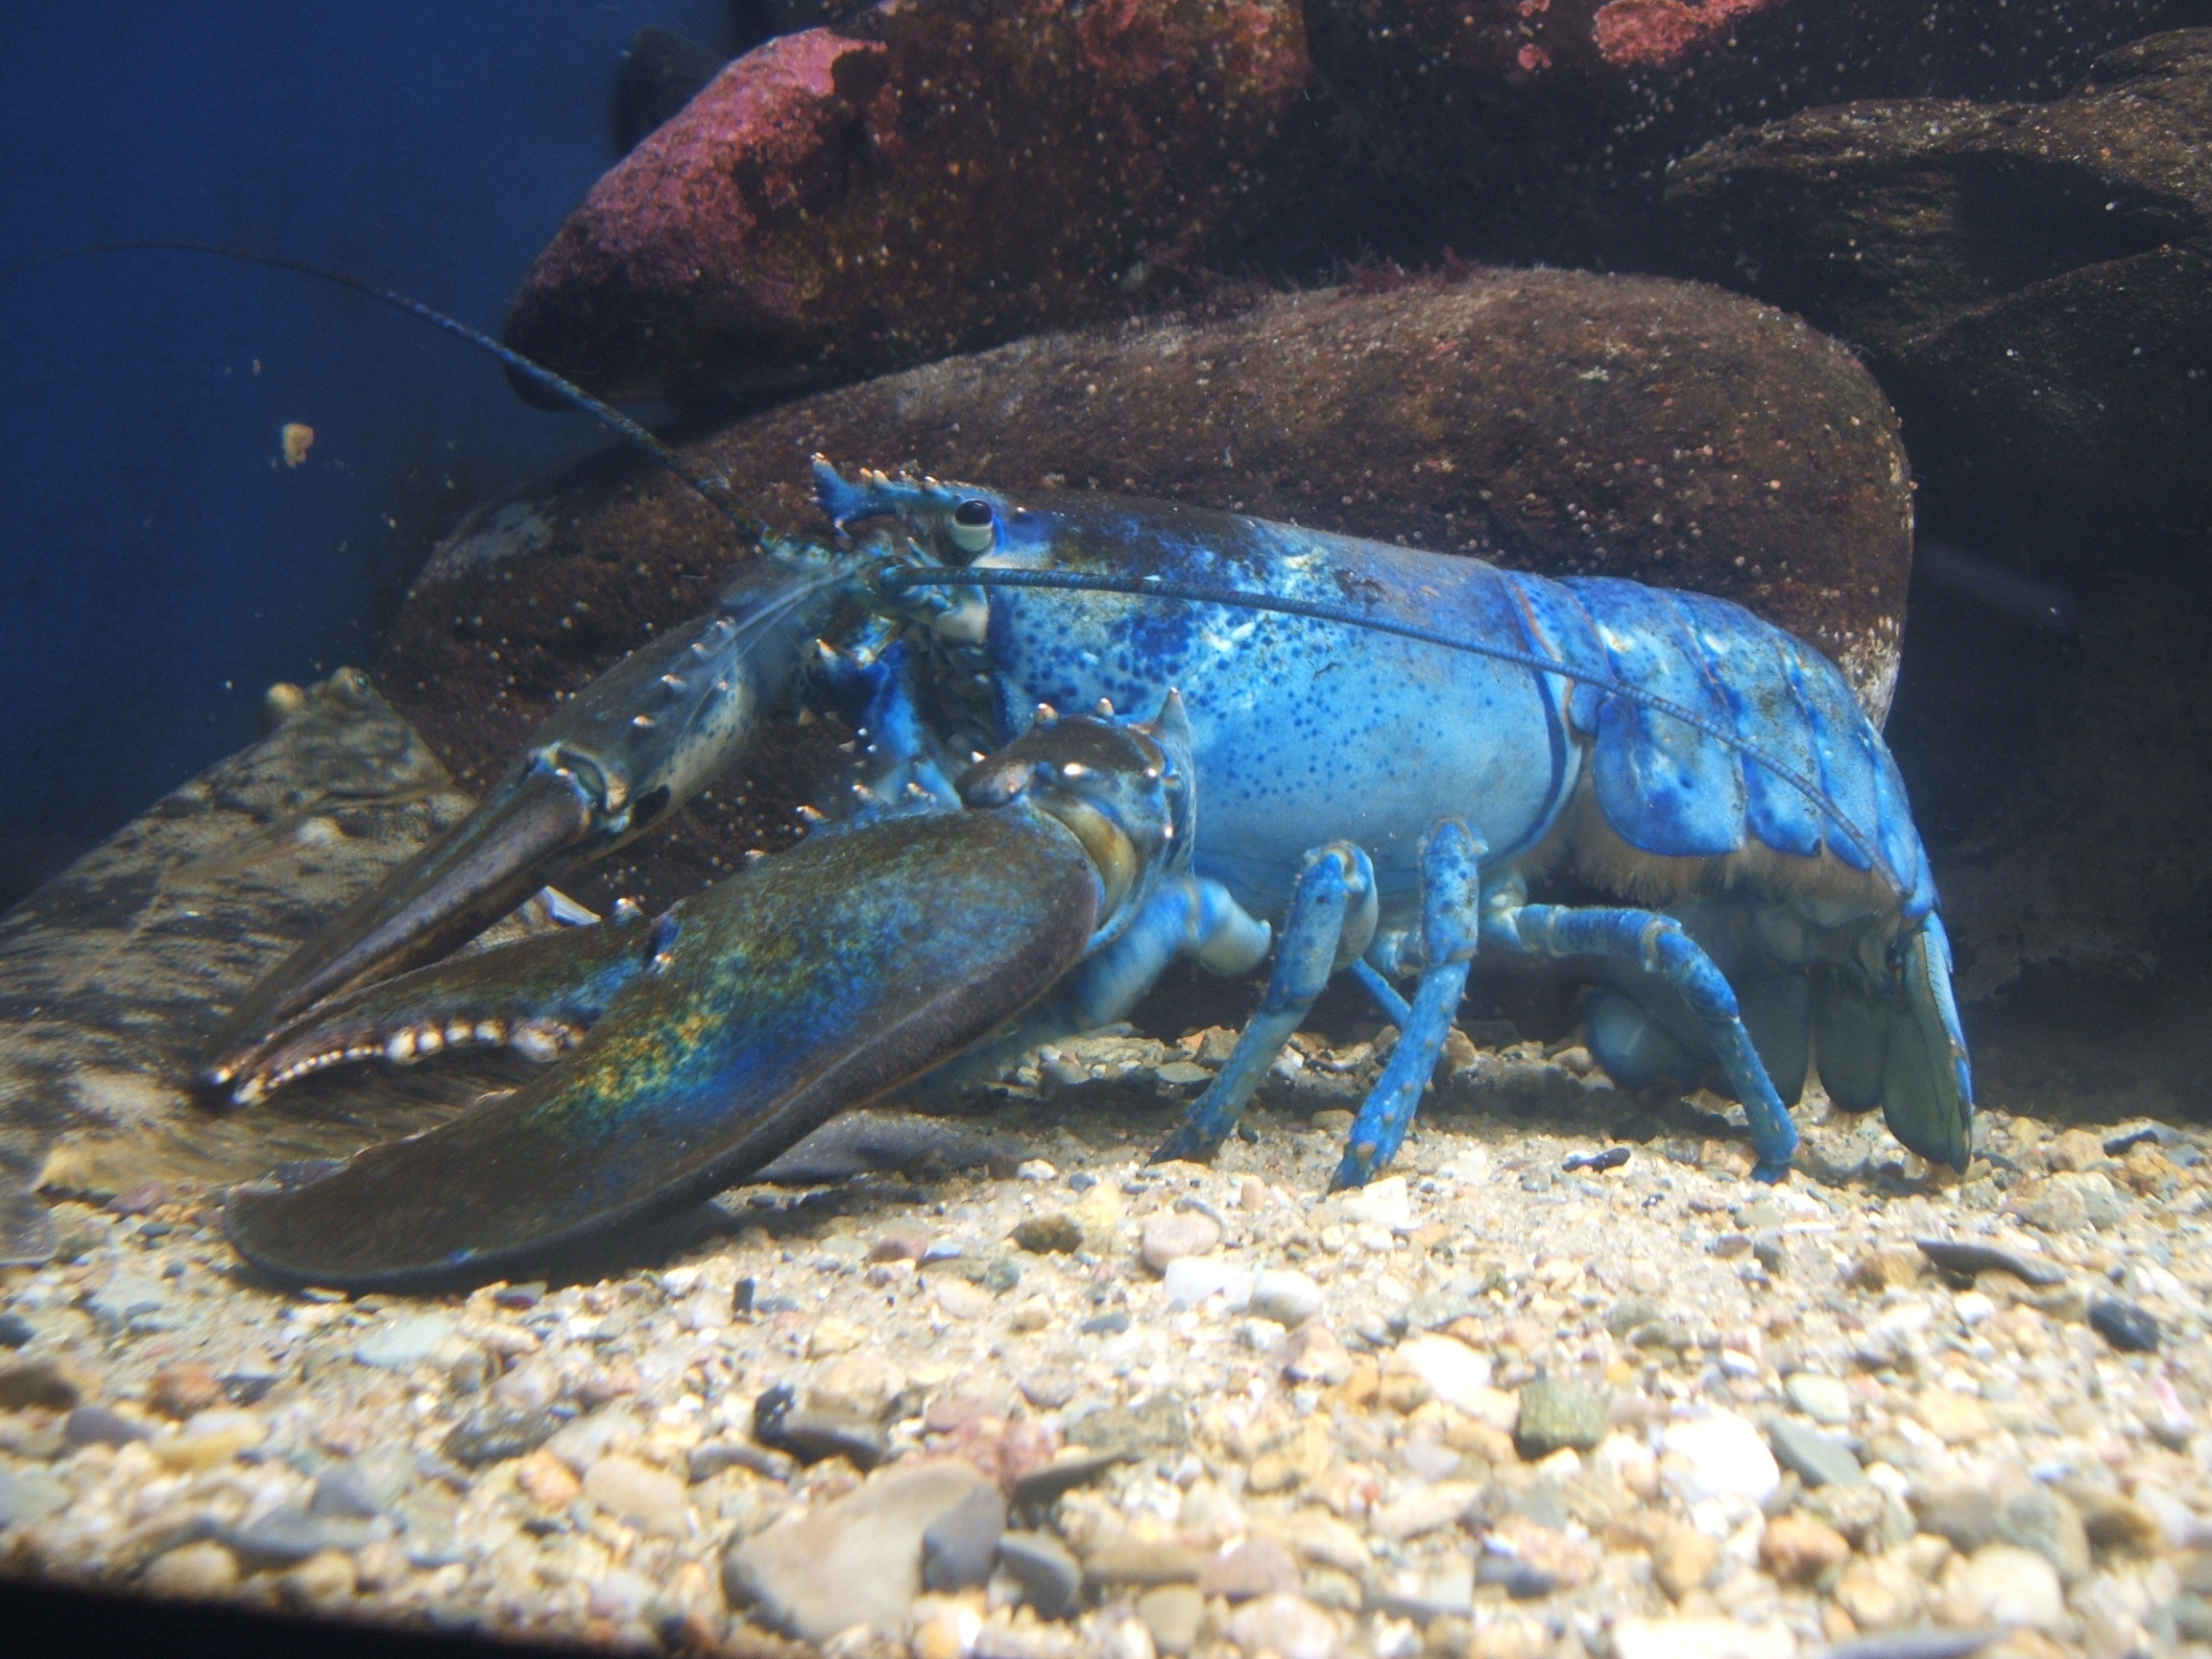 1 in 5,000 north Atlantic lobsters are born bright blue.